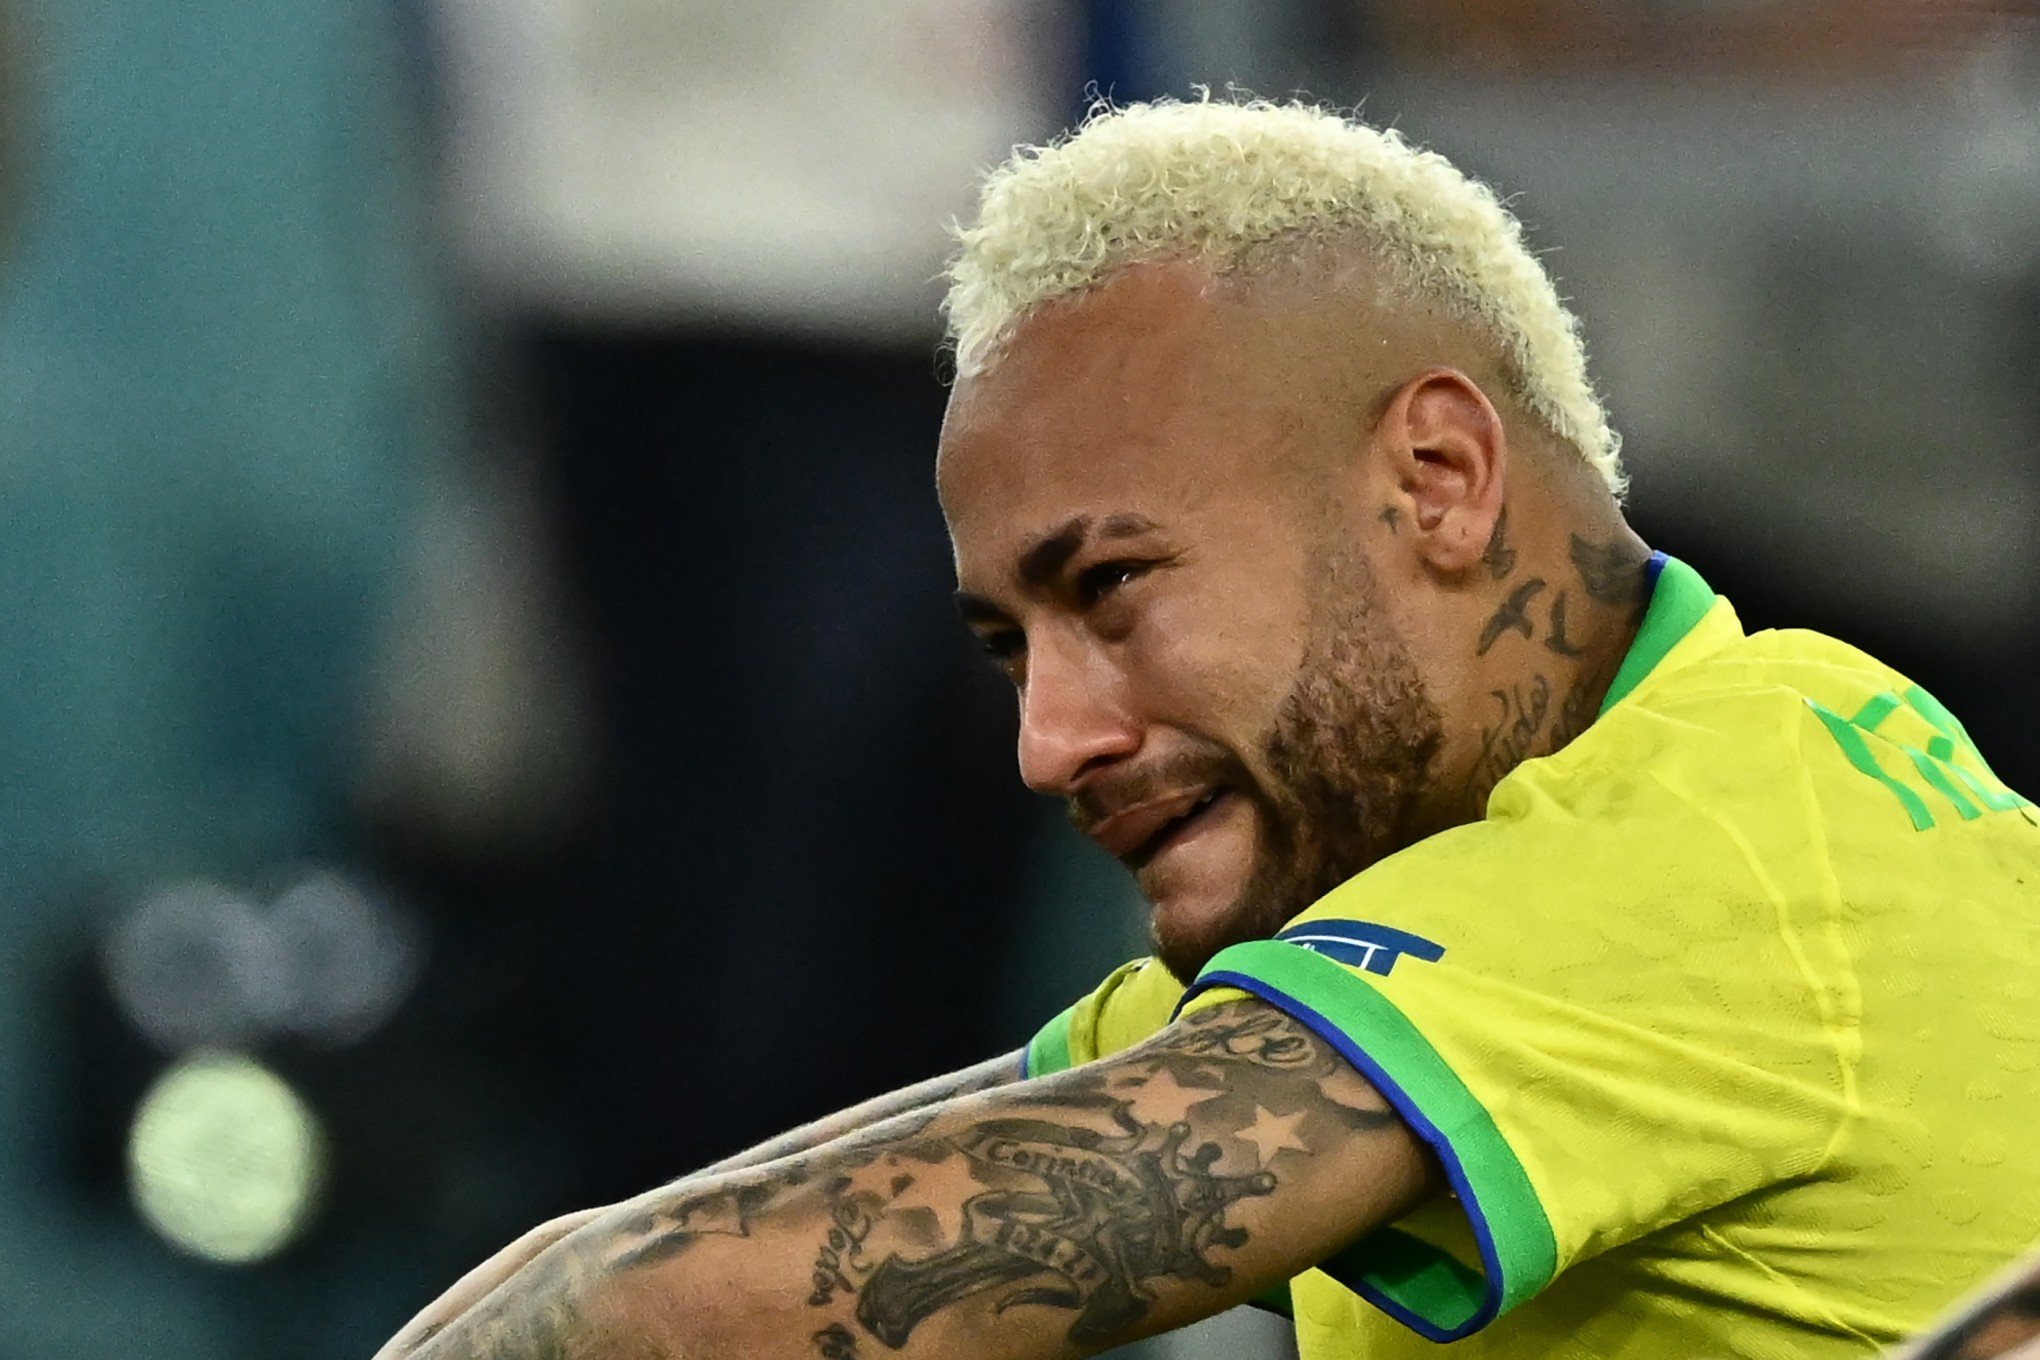 Brasil eliminado da Copa após perder para Croácia nos pênaltis